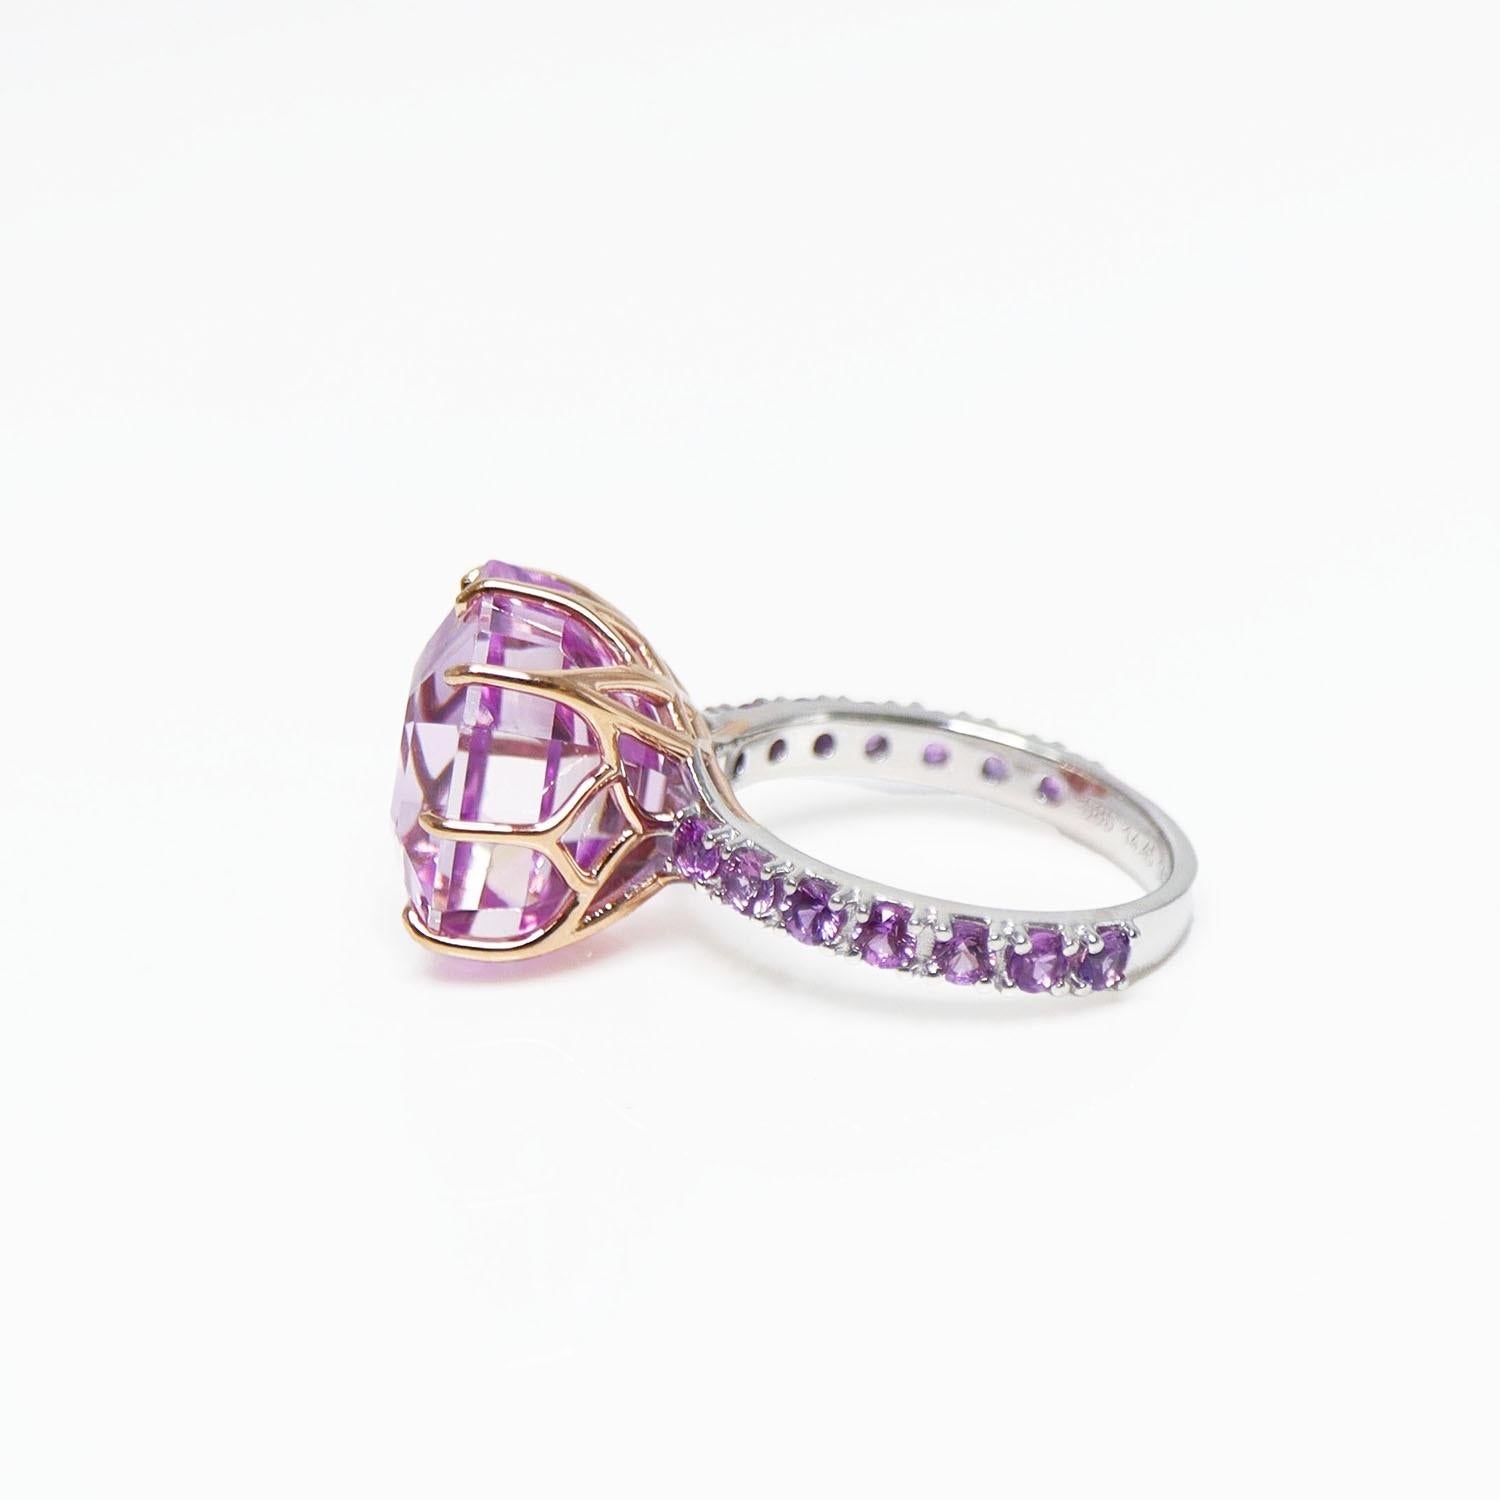 IGI 14K 14.45 Ct Kunzite&Pink Sapphires Antique Art Deco Style Engagement Ring For Sale 1